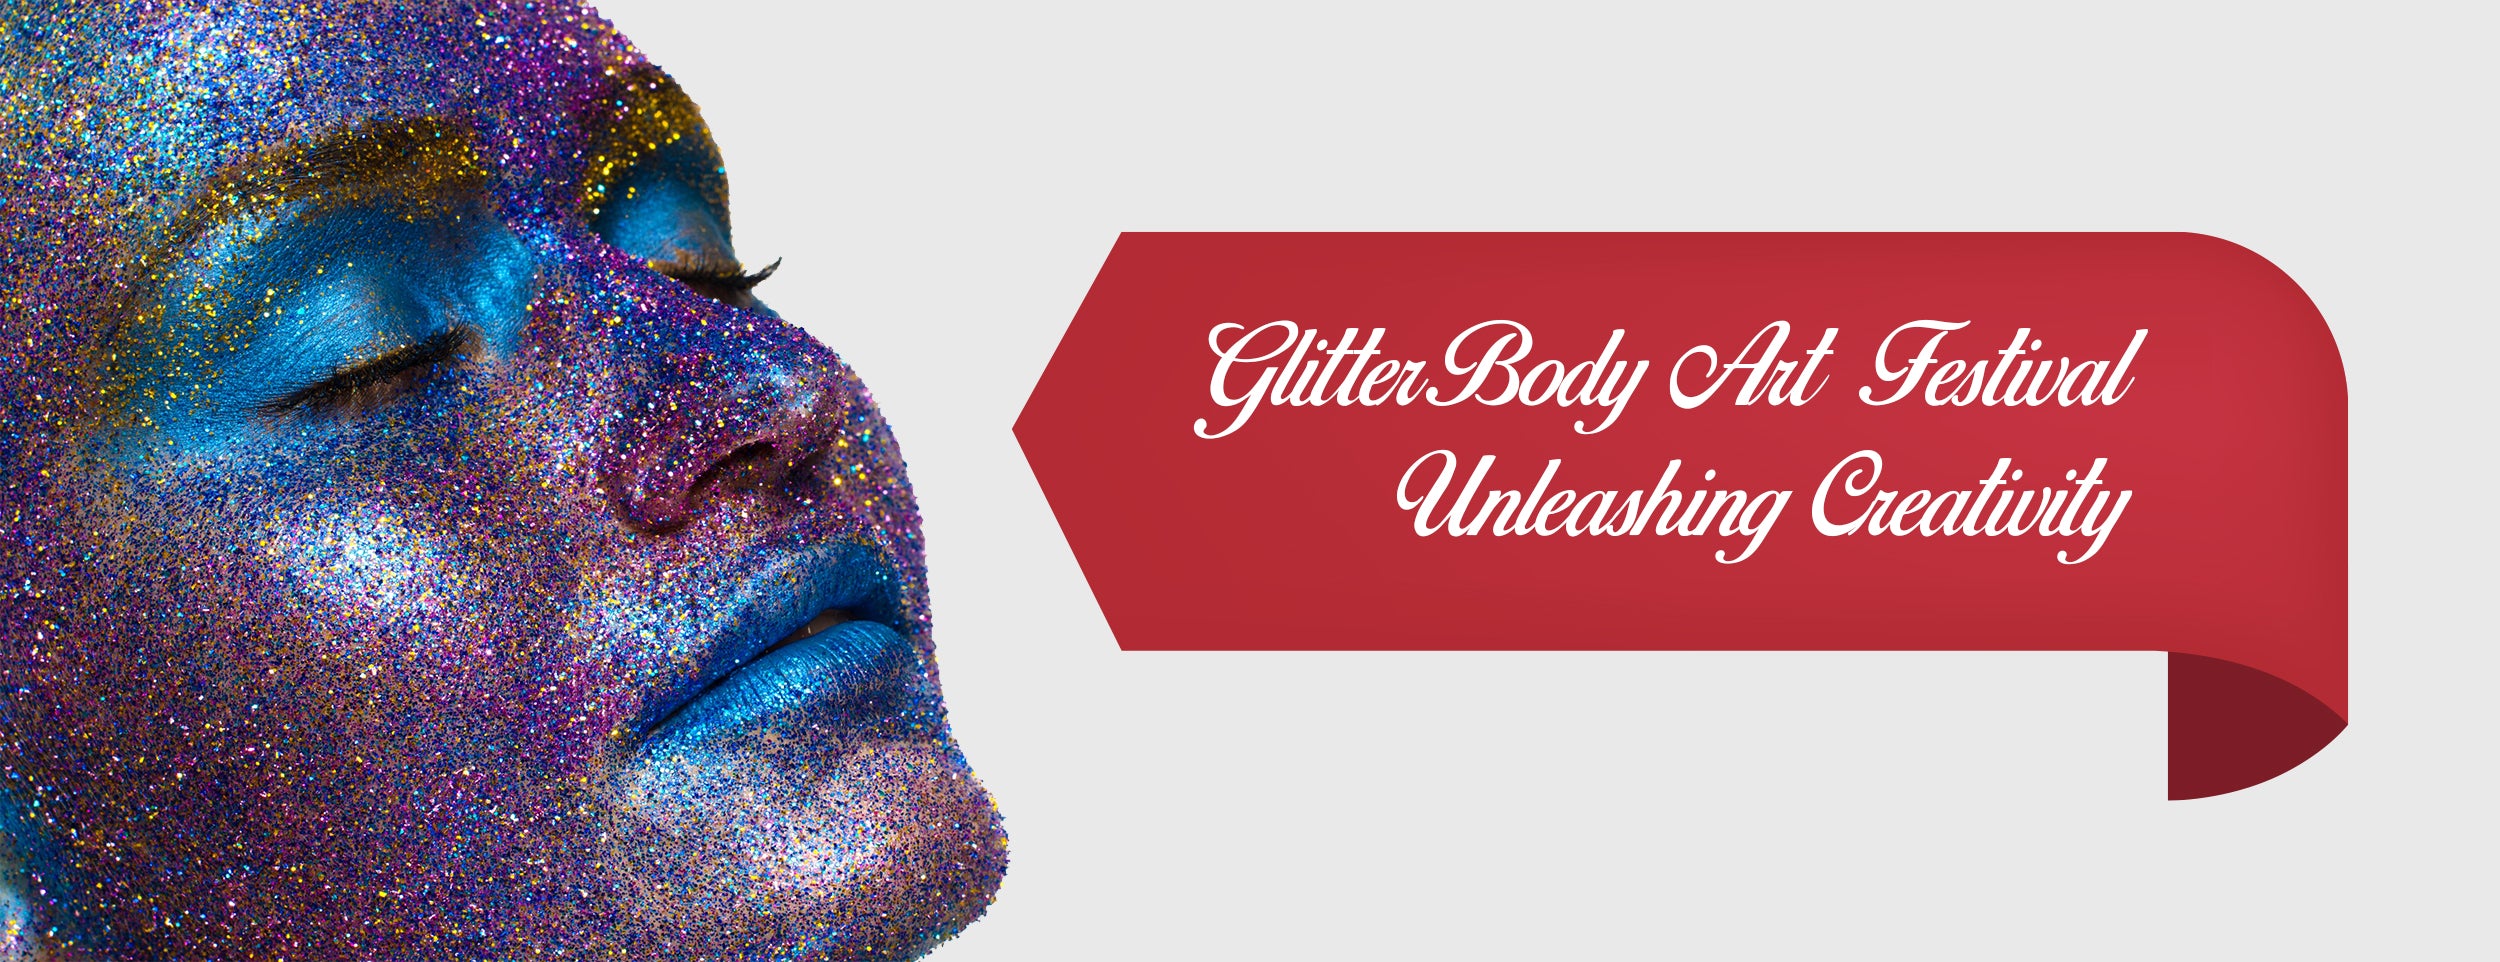 Glitter Body Art Festival Shaping the Future